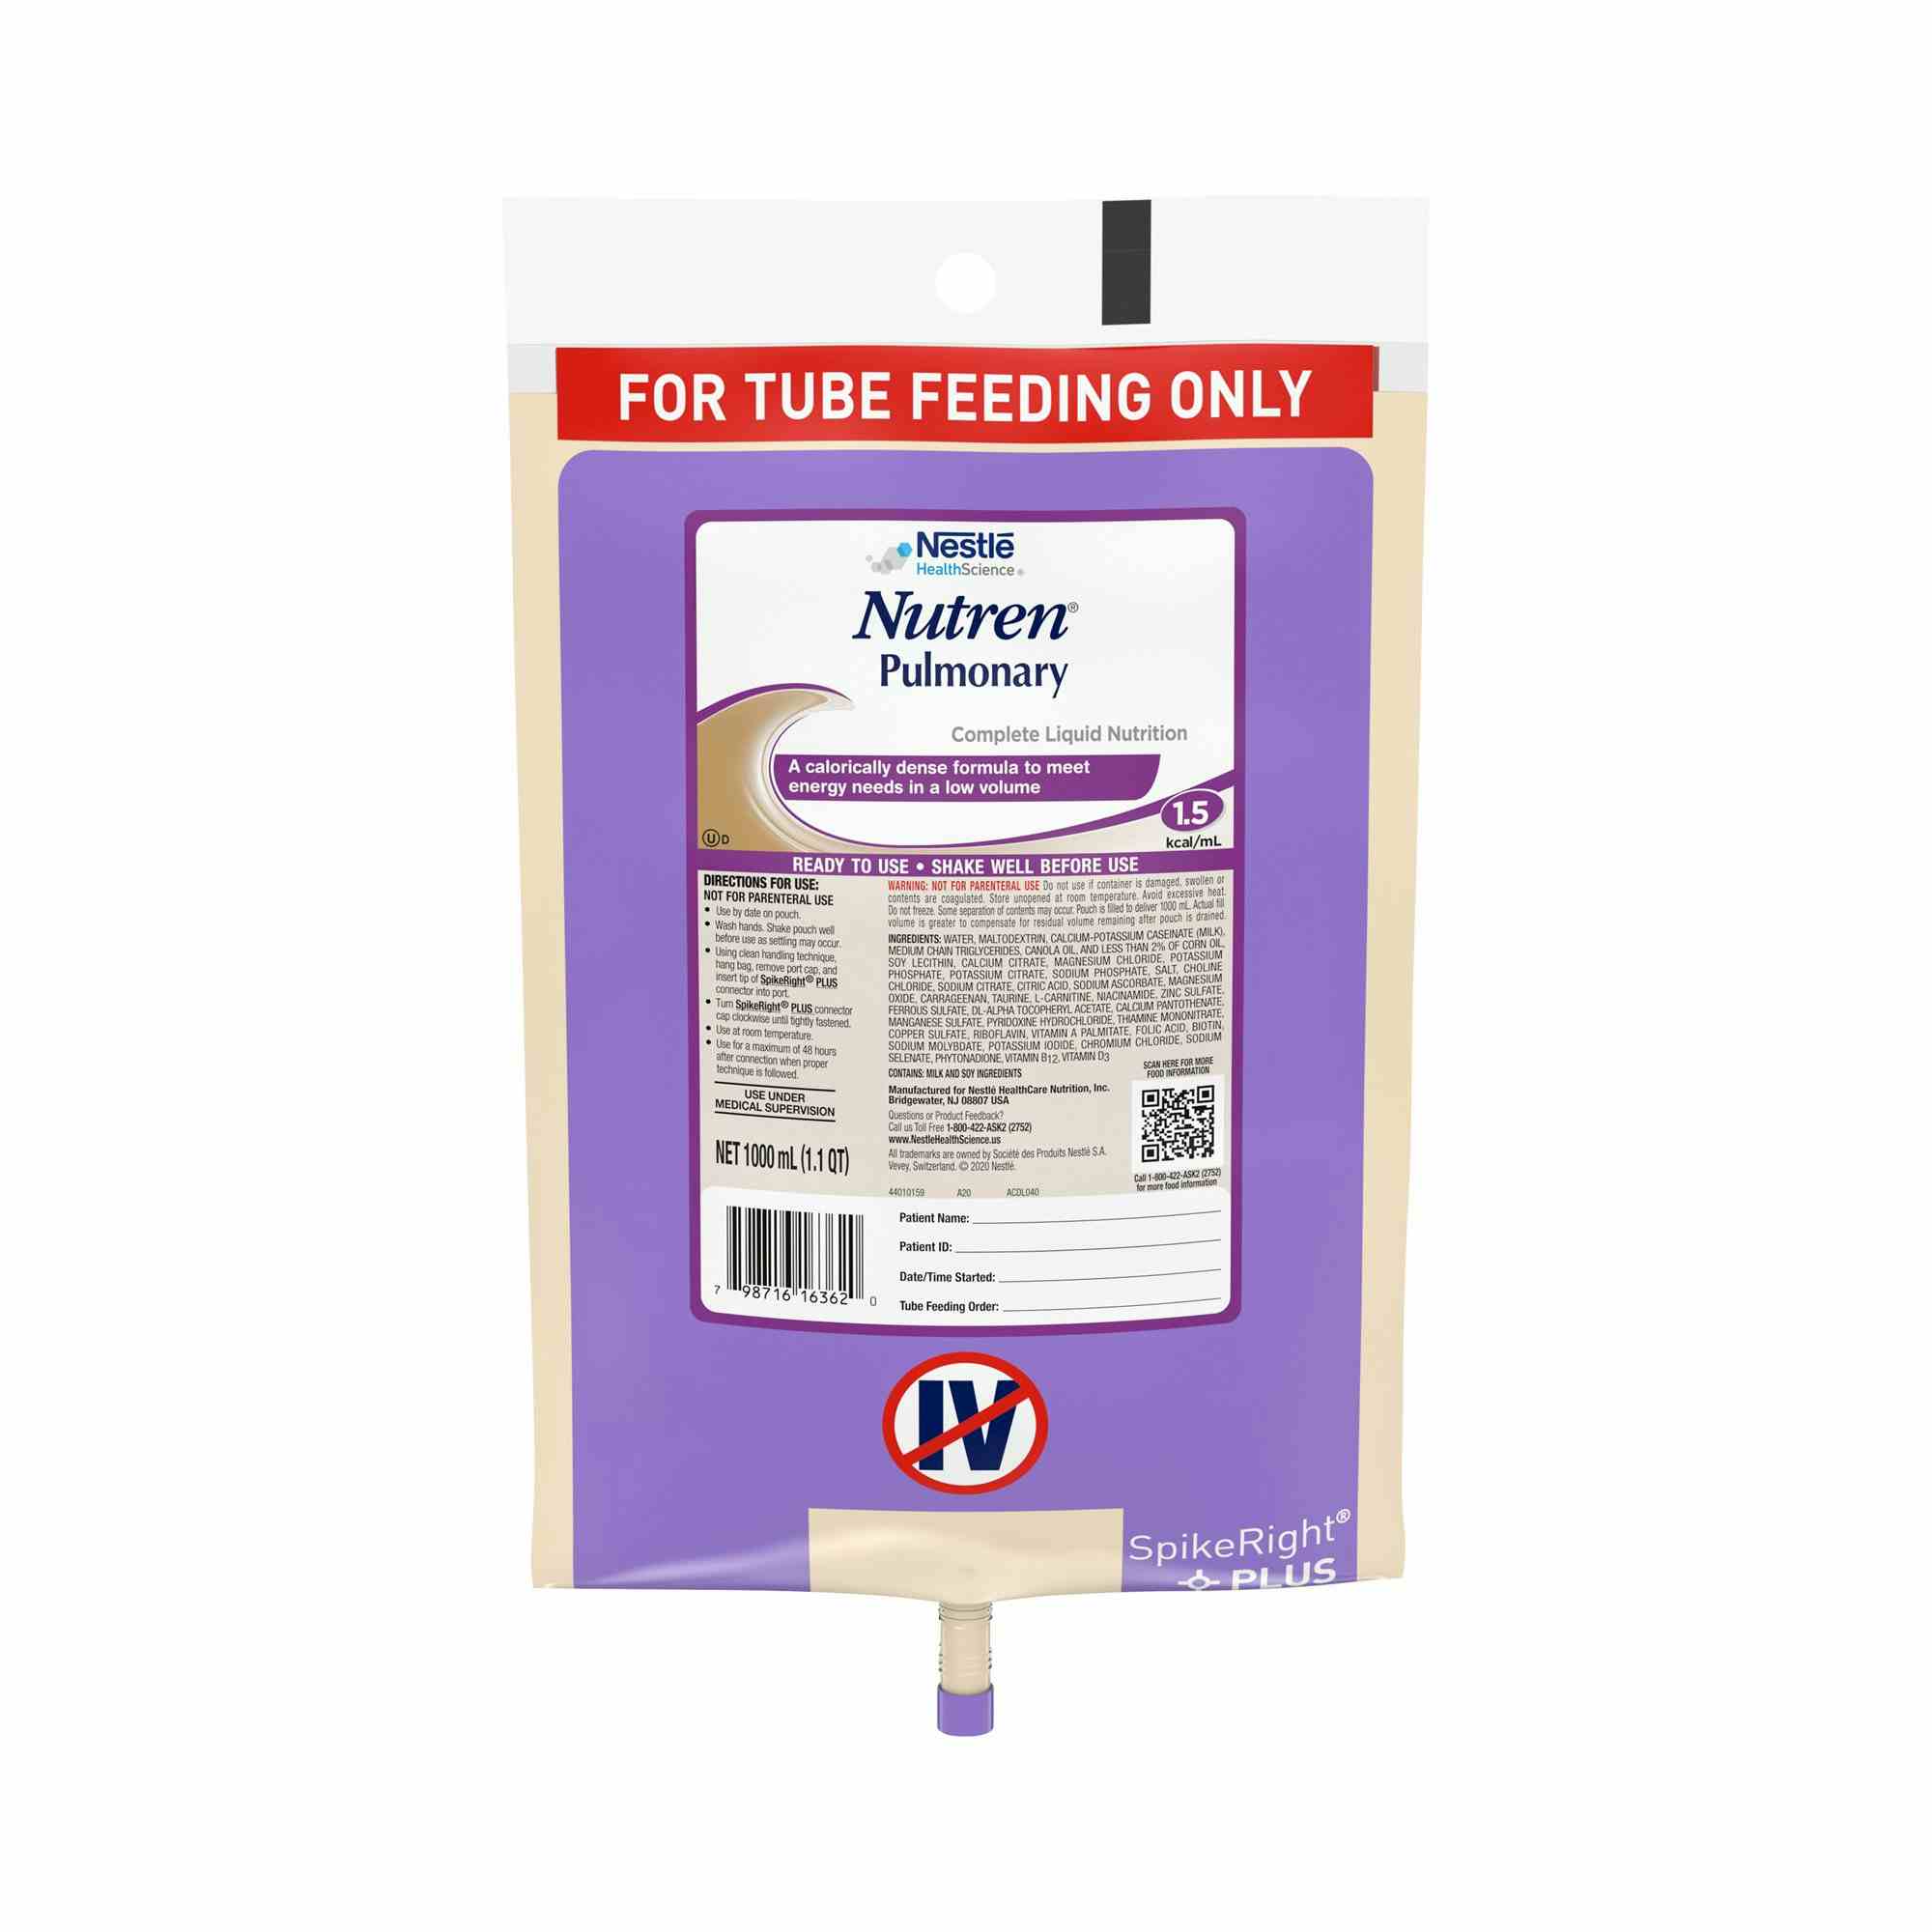 Nestle HealthScience Nutren Pulmonary Complete Liquid Nutrition Tube Feeding Formula, 33.8 oz., 10798716223925, 1 Each